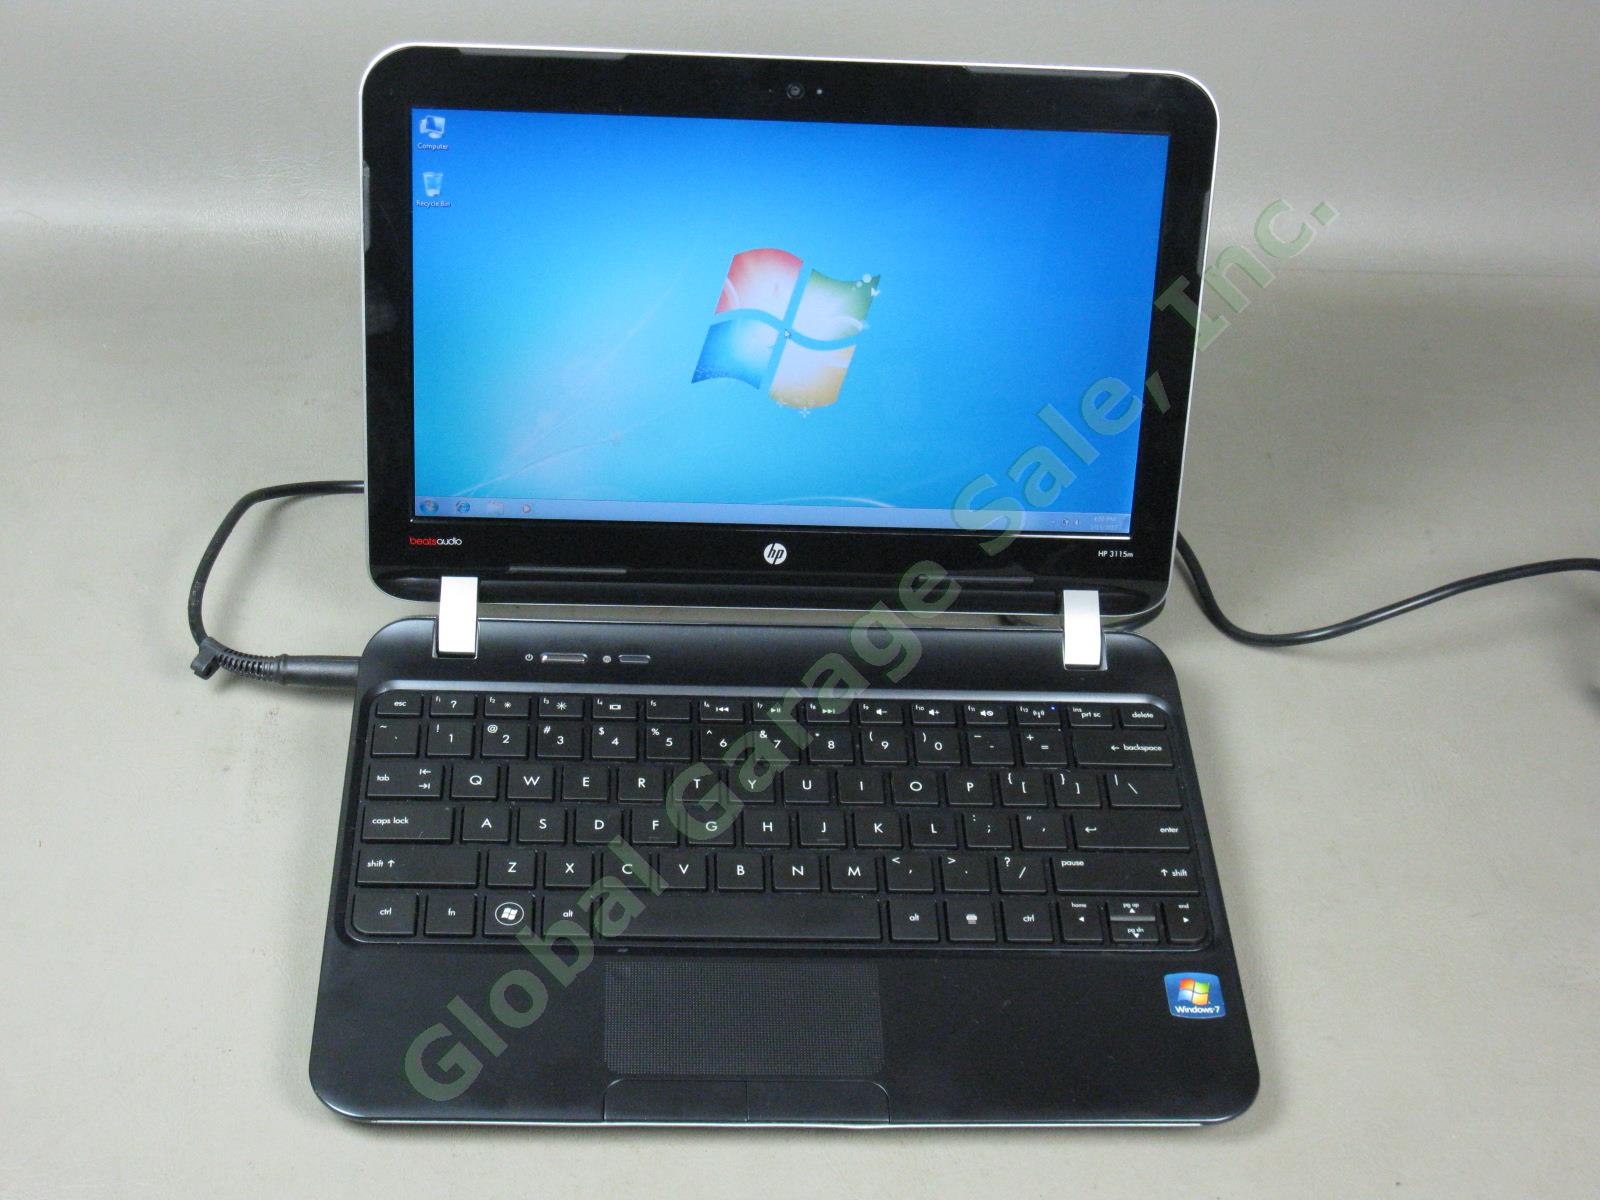 HP 3115m 11.6" Notebook Laptop Computer AMD 1.65GHz 4GB 320GB Windows 7 Ultimate